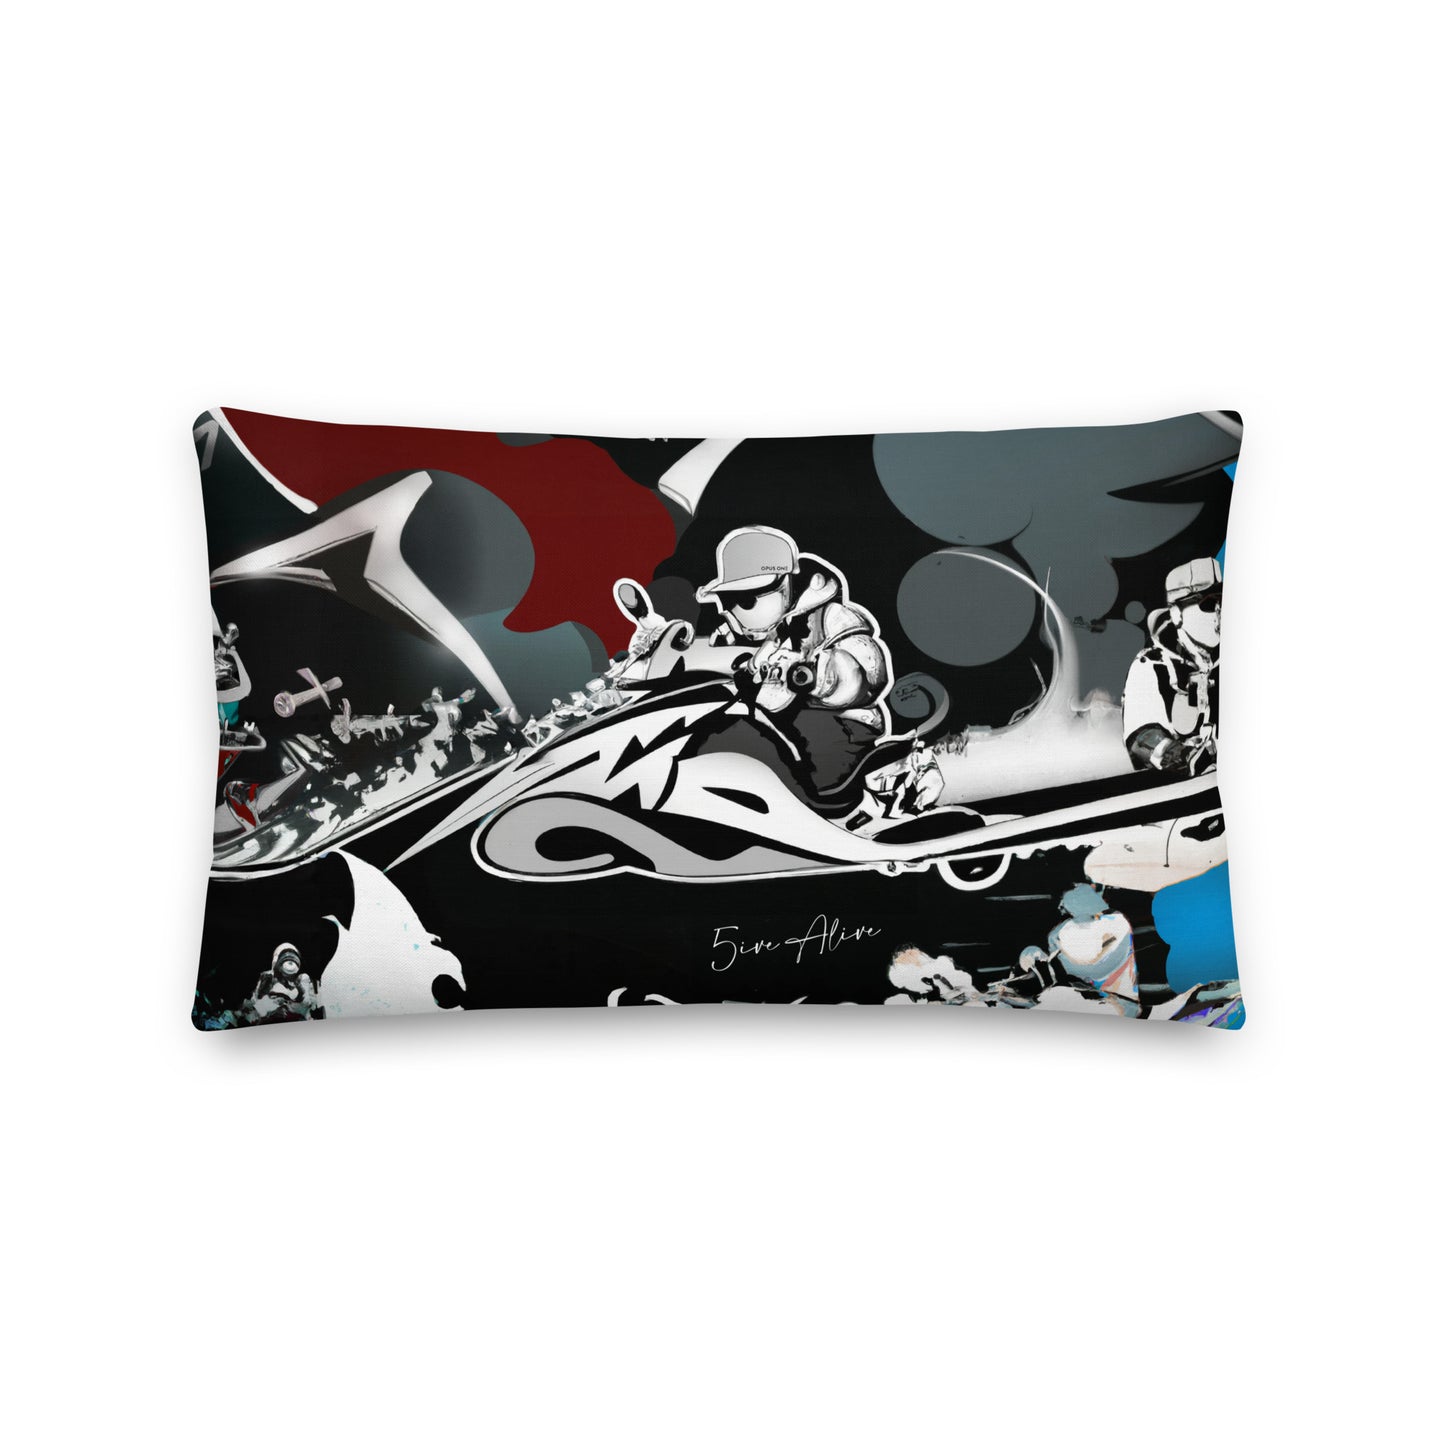 5ive Alive (Ltd Ed Jet Ski) Premium Pillow